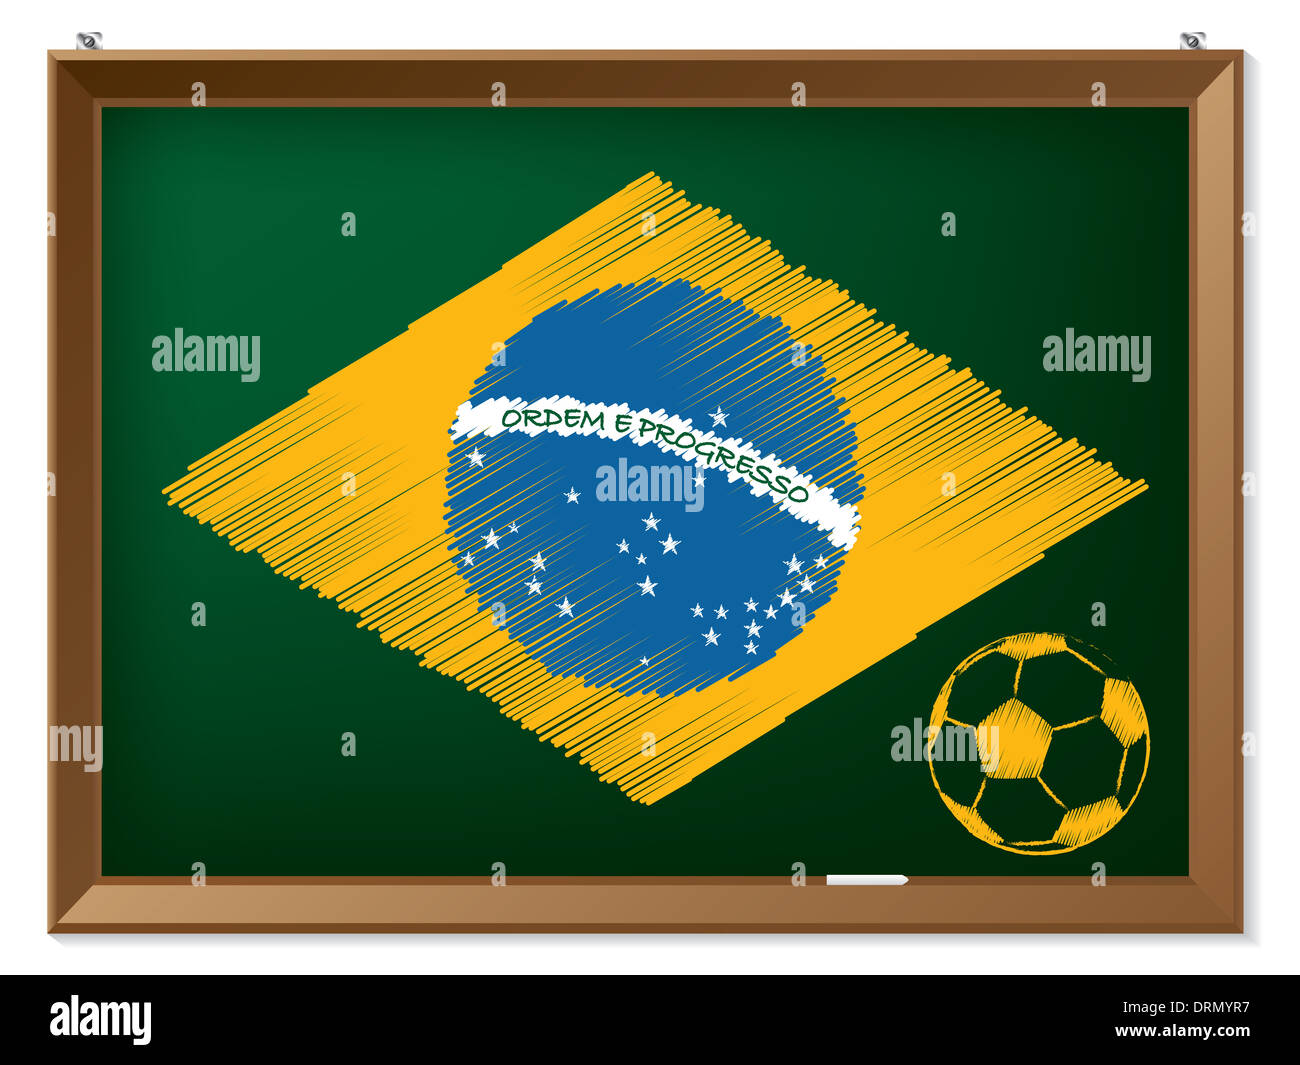 Brasil flag and soccerbal drawn on chalkboard Stock Photo